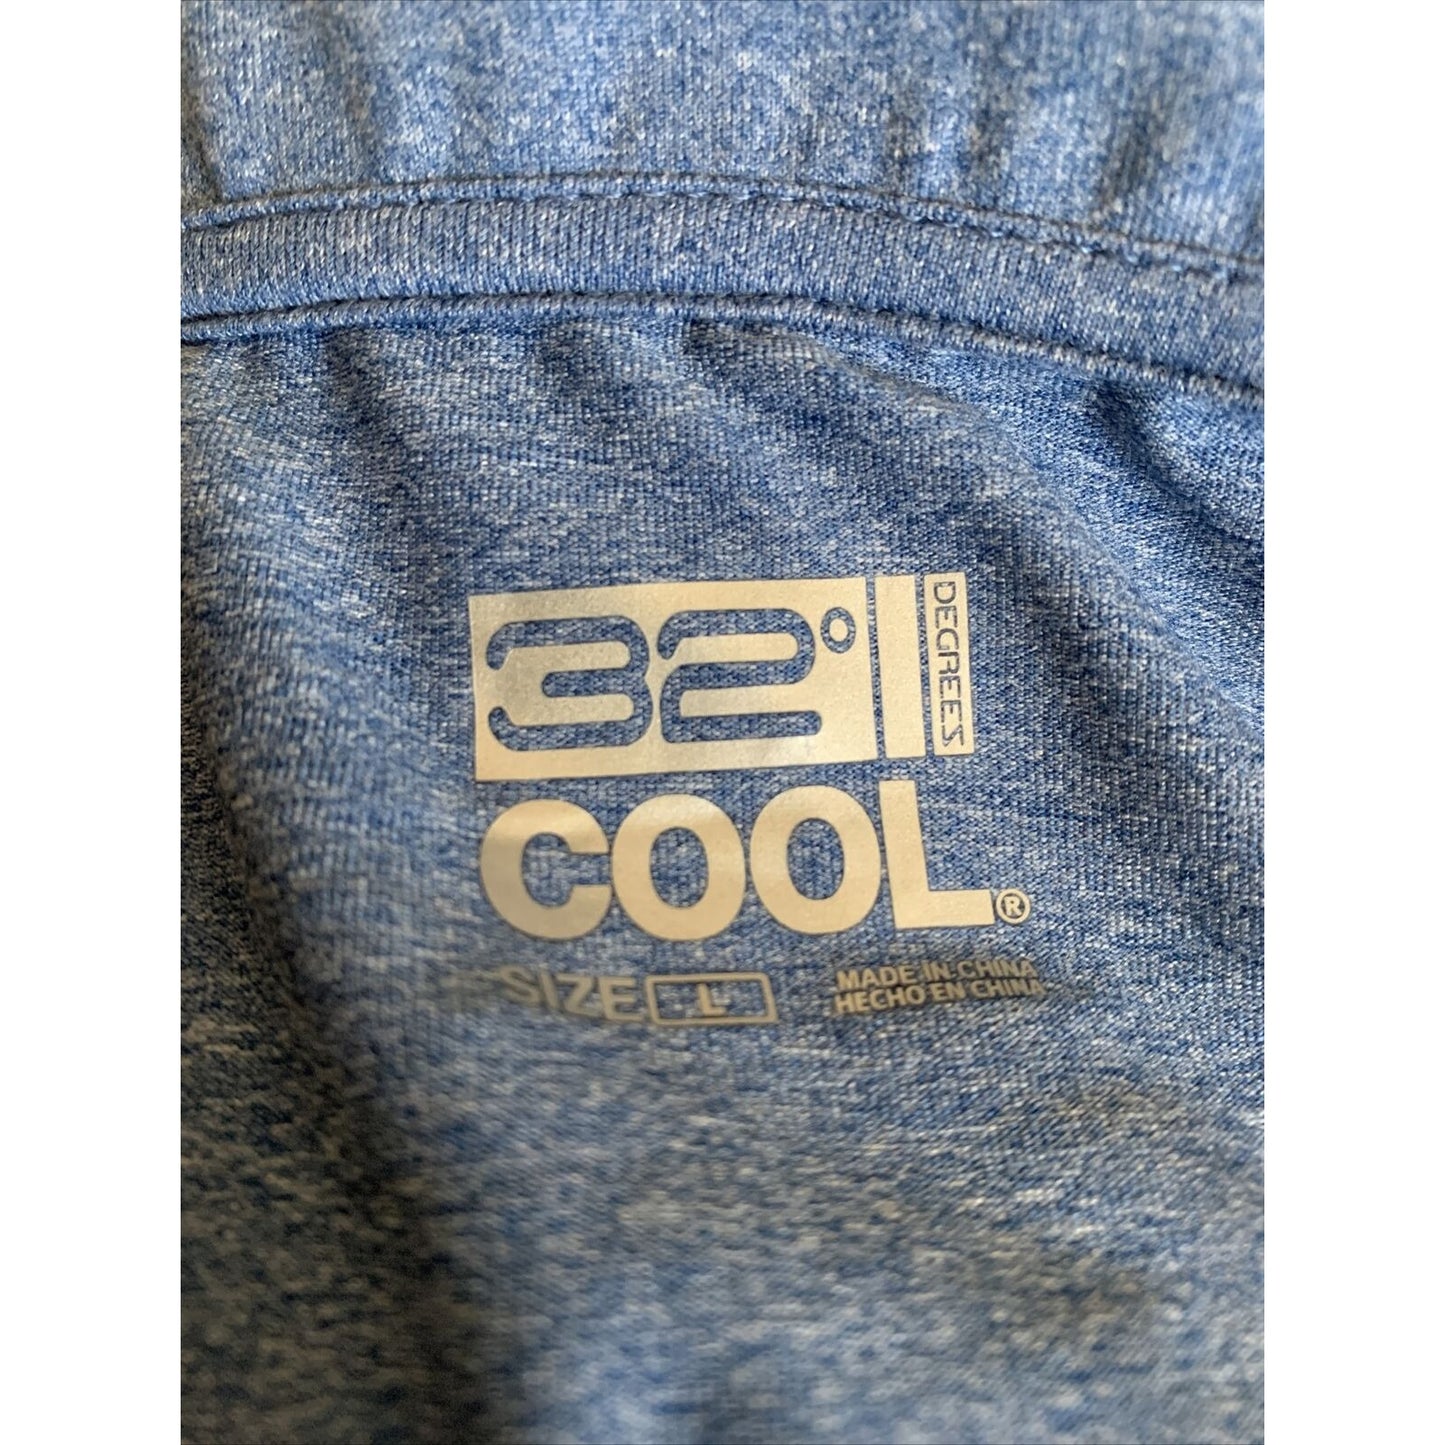 32 Degrees Cool Golf Polo Men’s Light Blue Soft Fabric Shirt Large